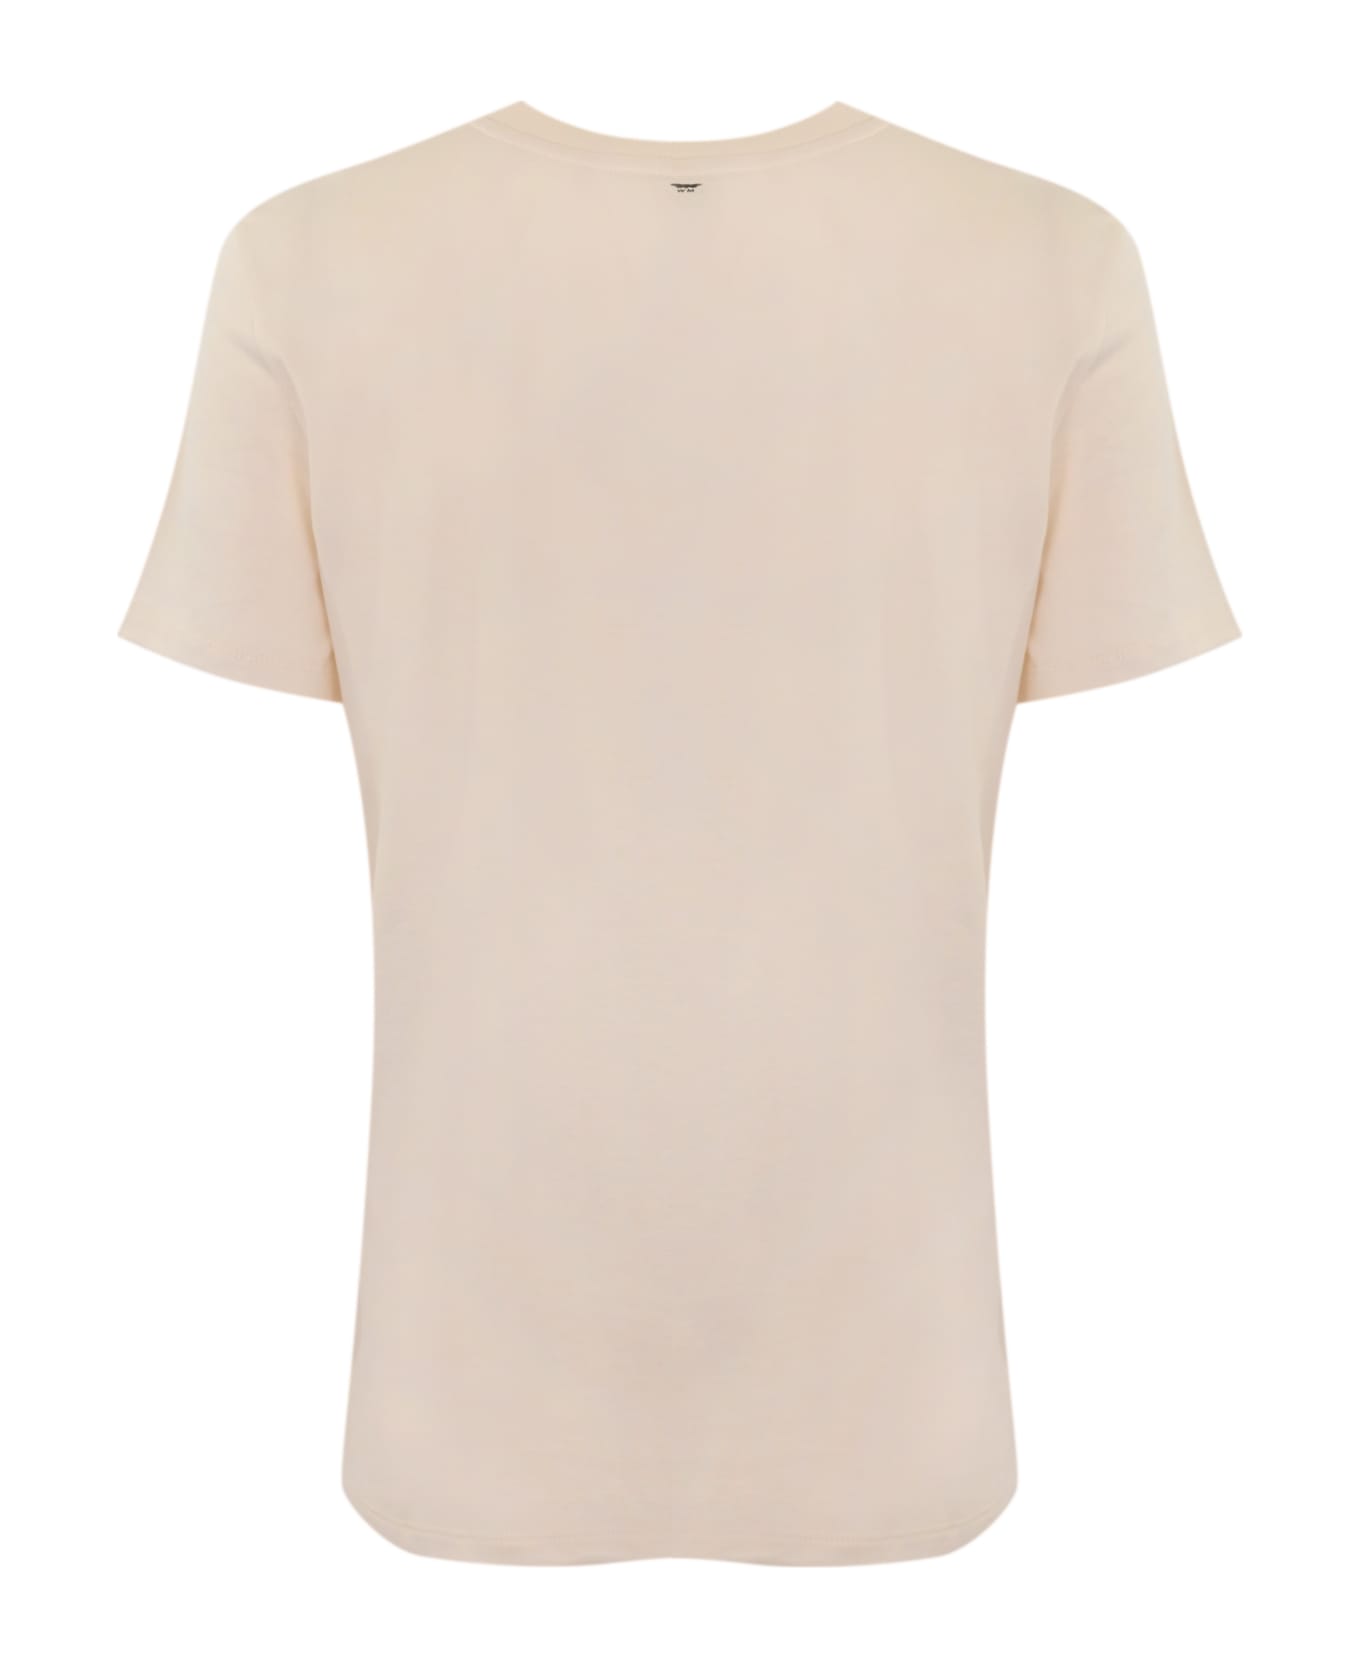 Weekend Max Mara "nervi" Cotton T-shirt With Nervers Print - Avorio